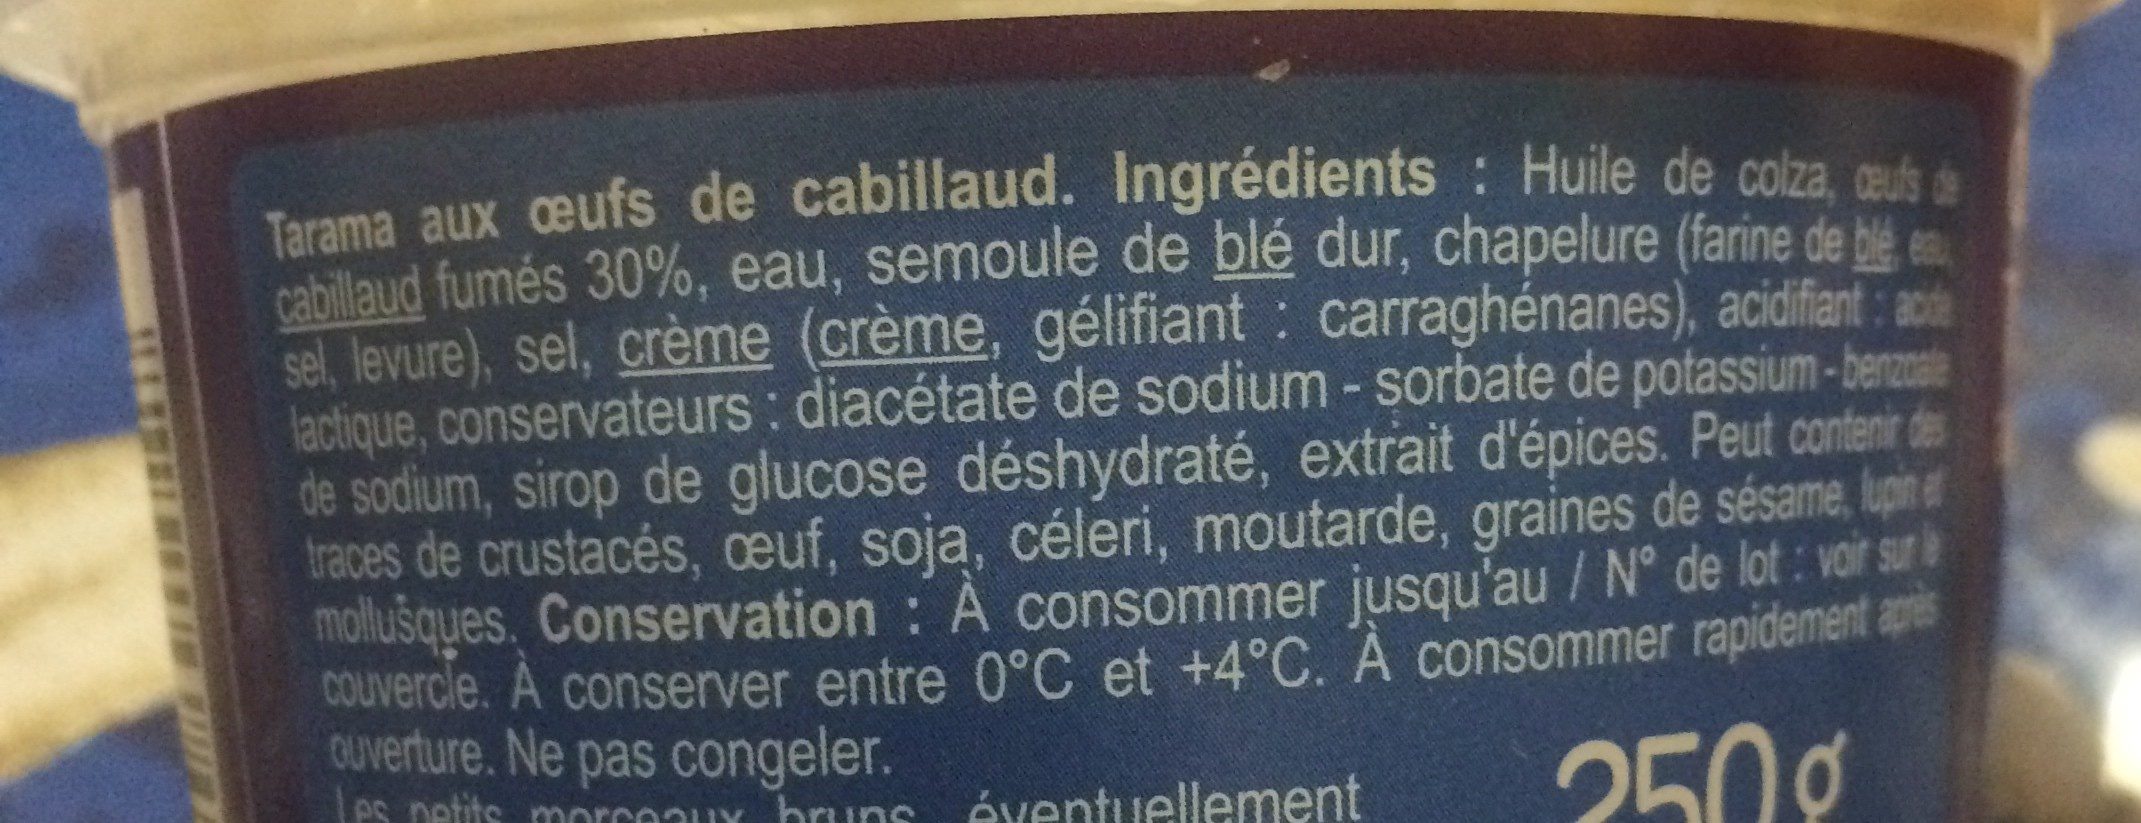 Tarama aux œufs de cabillaud - Ingrediënten - fr